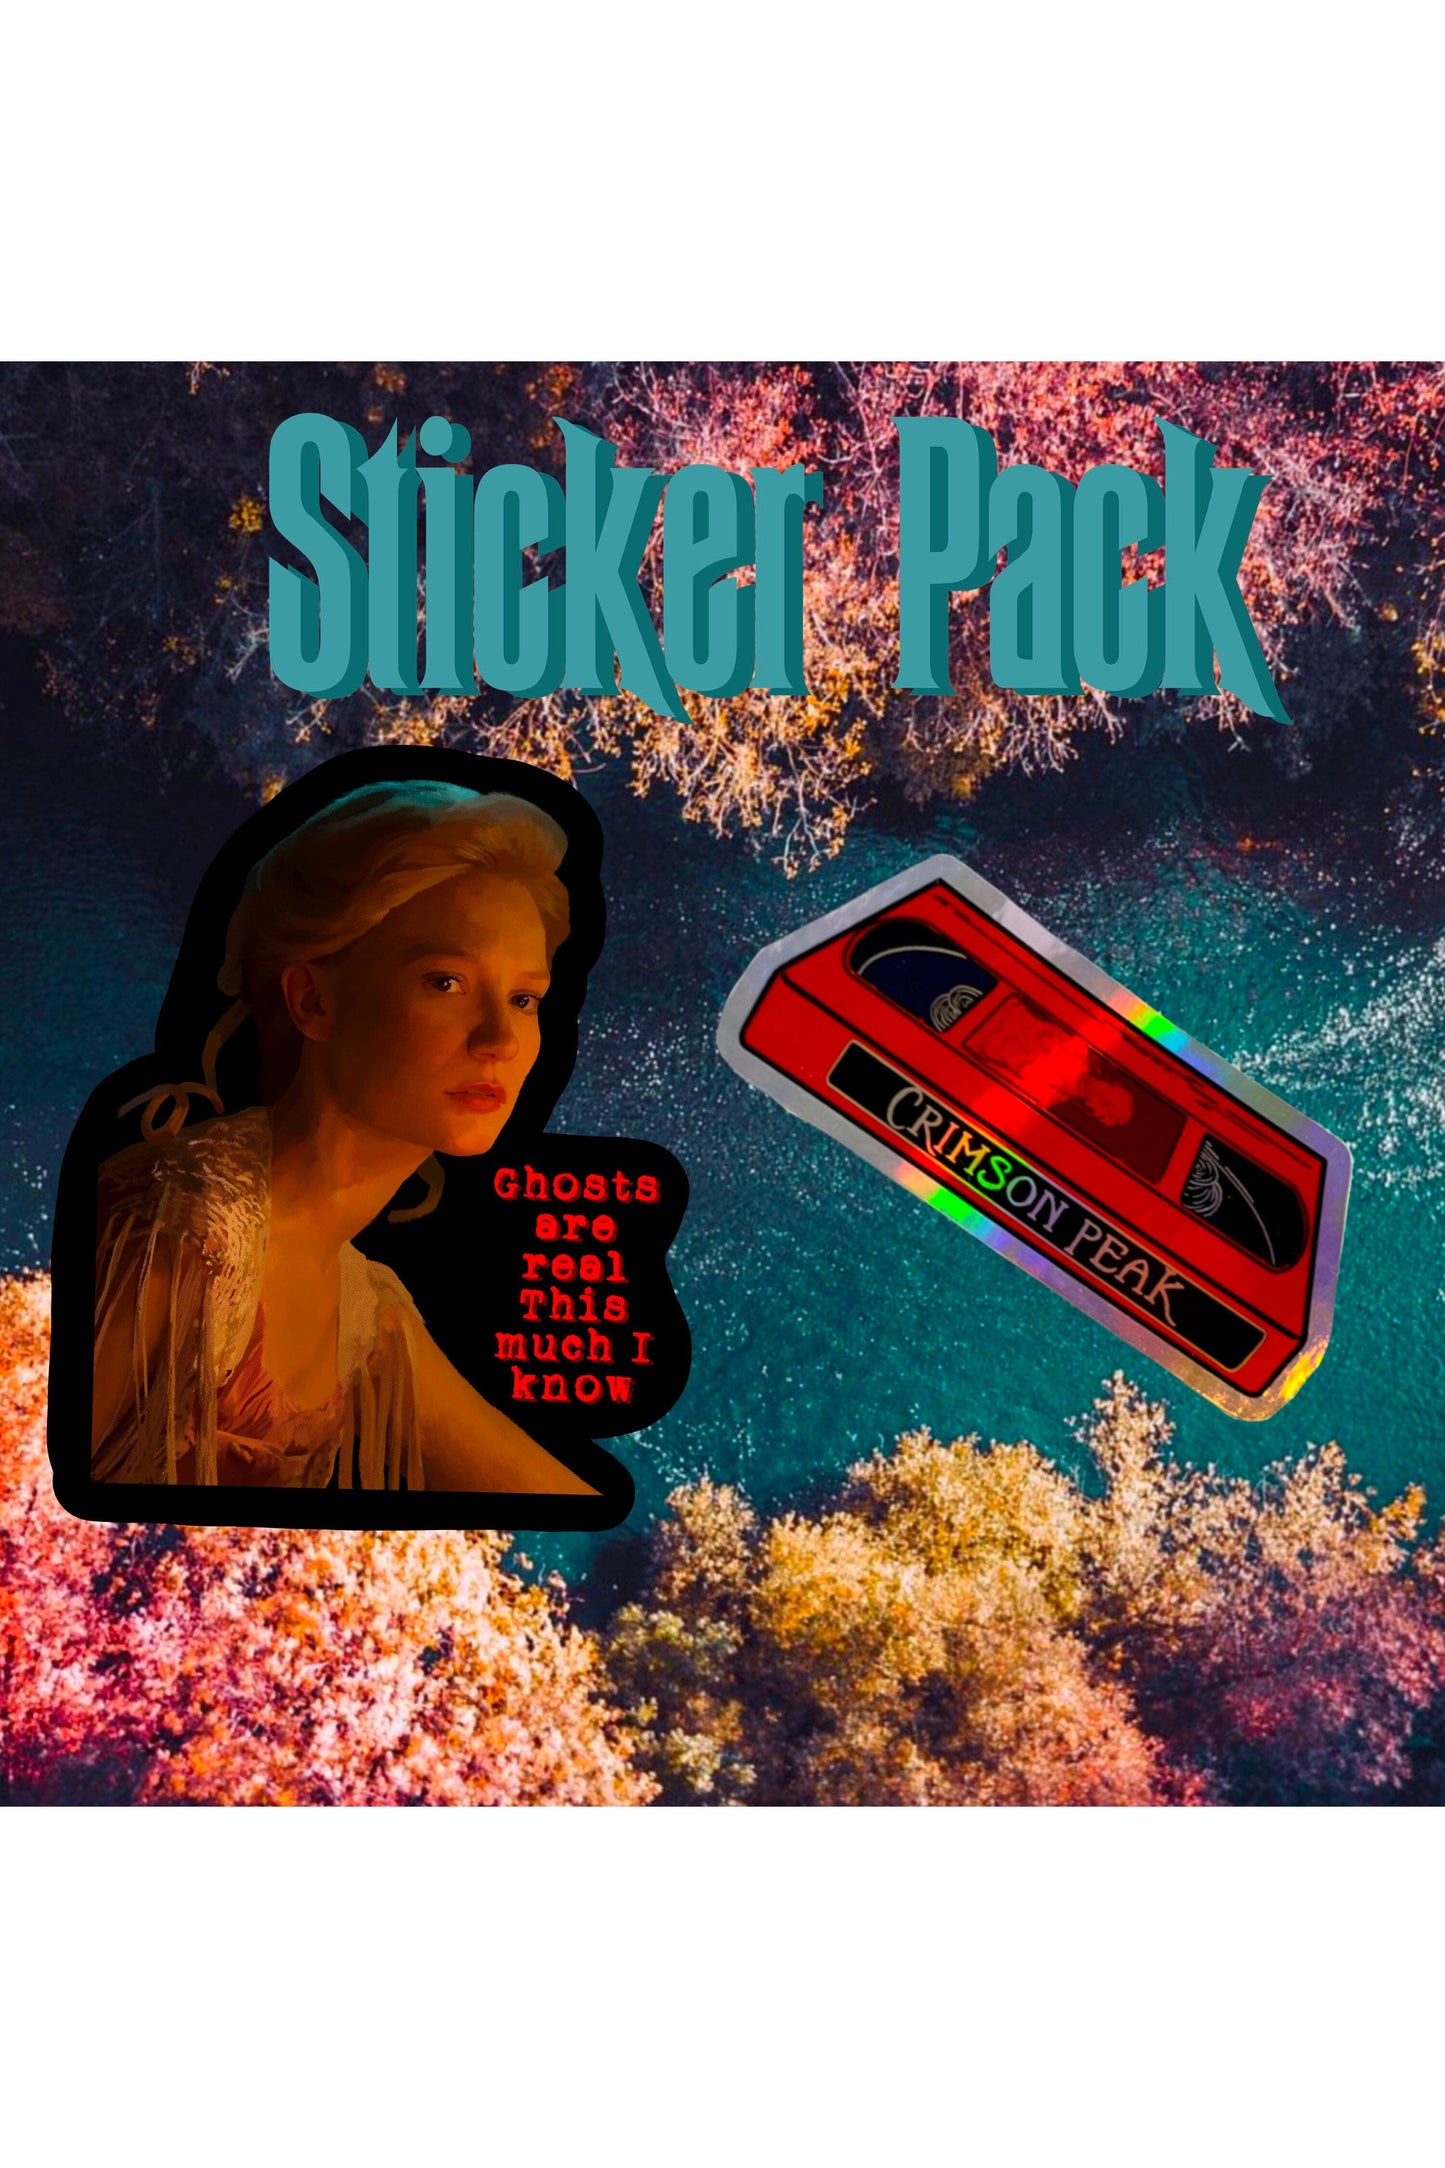 Crimson Peak VHS Holographic Sticker + Final Girl Sticker Pack (Set of 2).